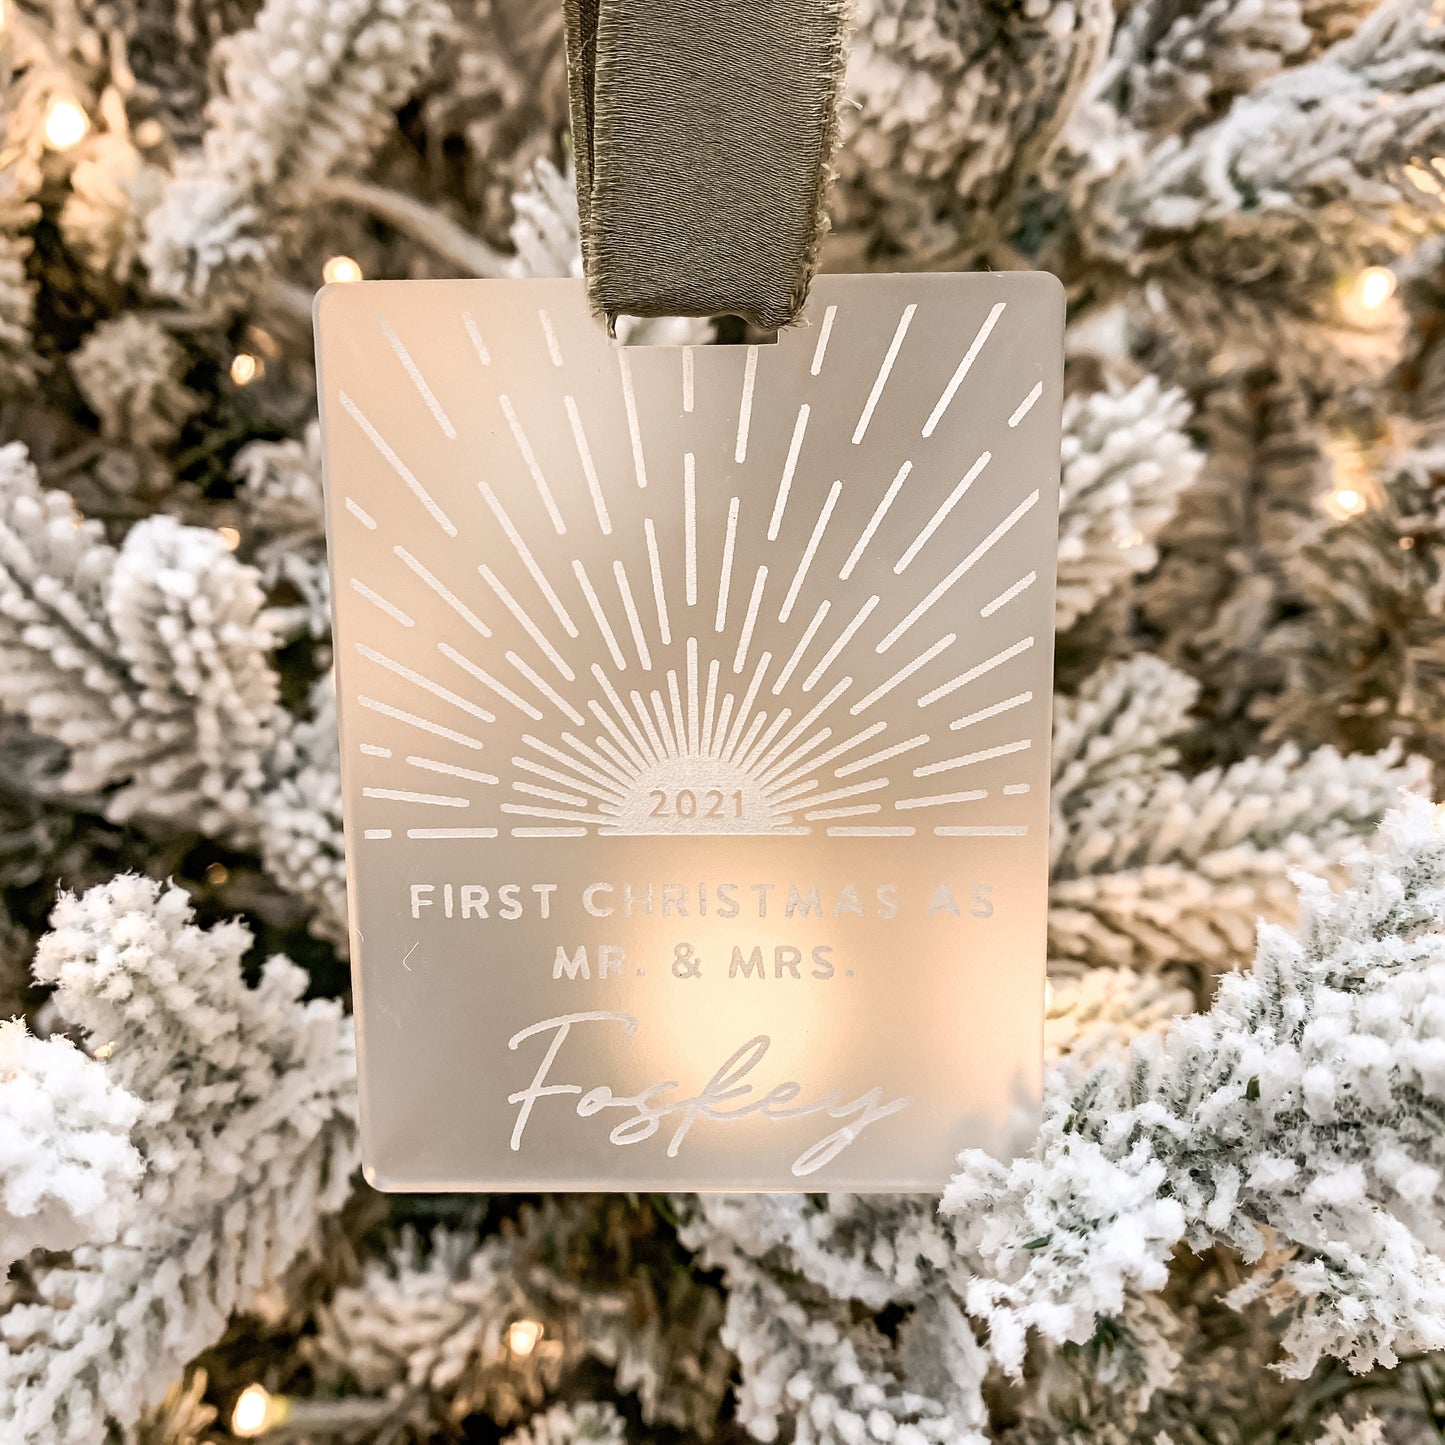 First Christmas as Mr. & Mrs. Christmas Ornament | Sun Beam | 2021